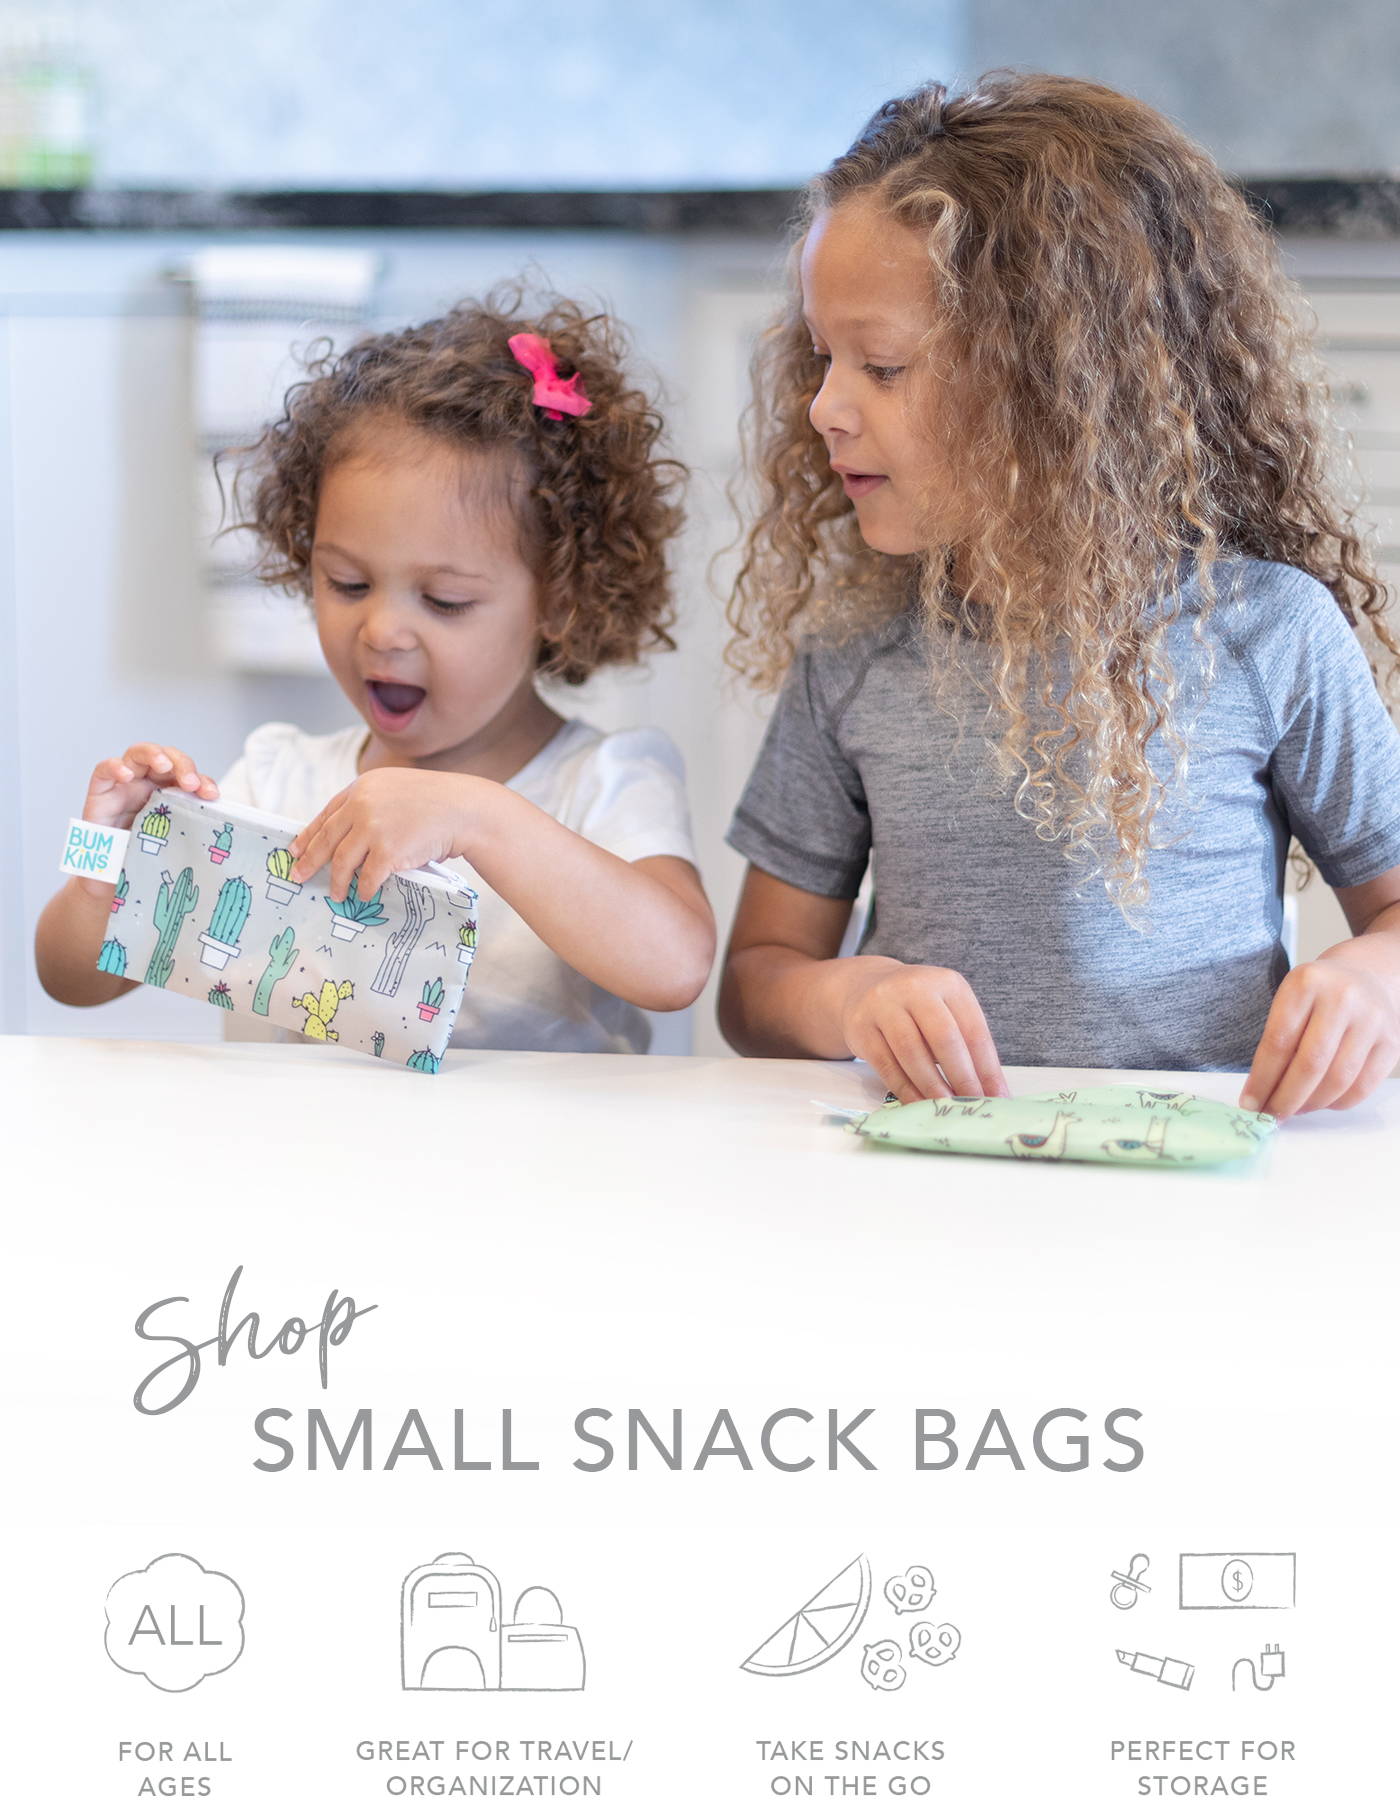 Eco-Friendly Outdoor & Wildlife Reusable Sandwich Bag Set | Bumkins